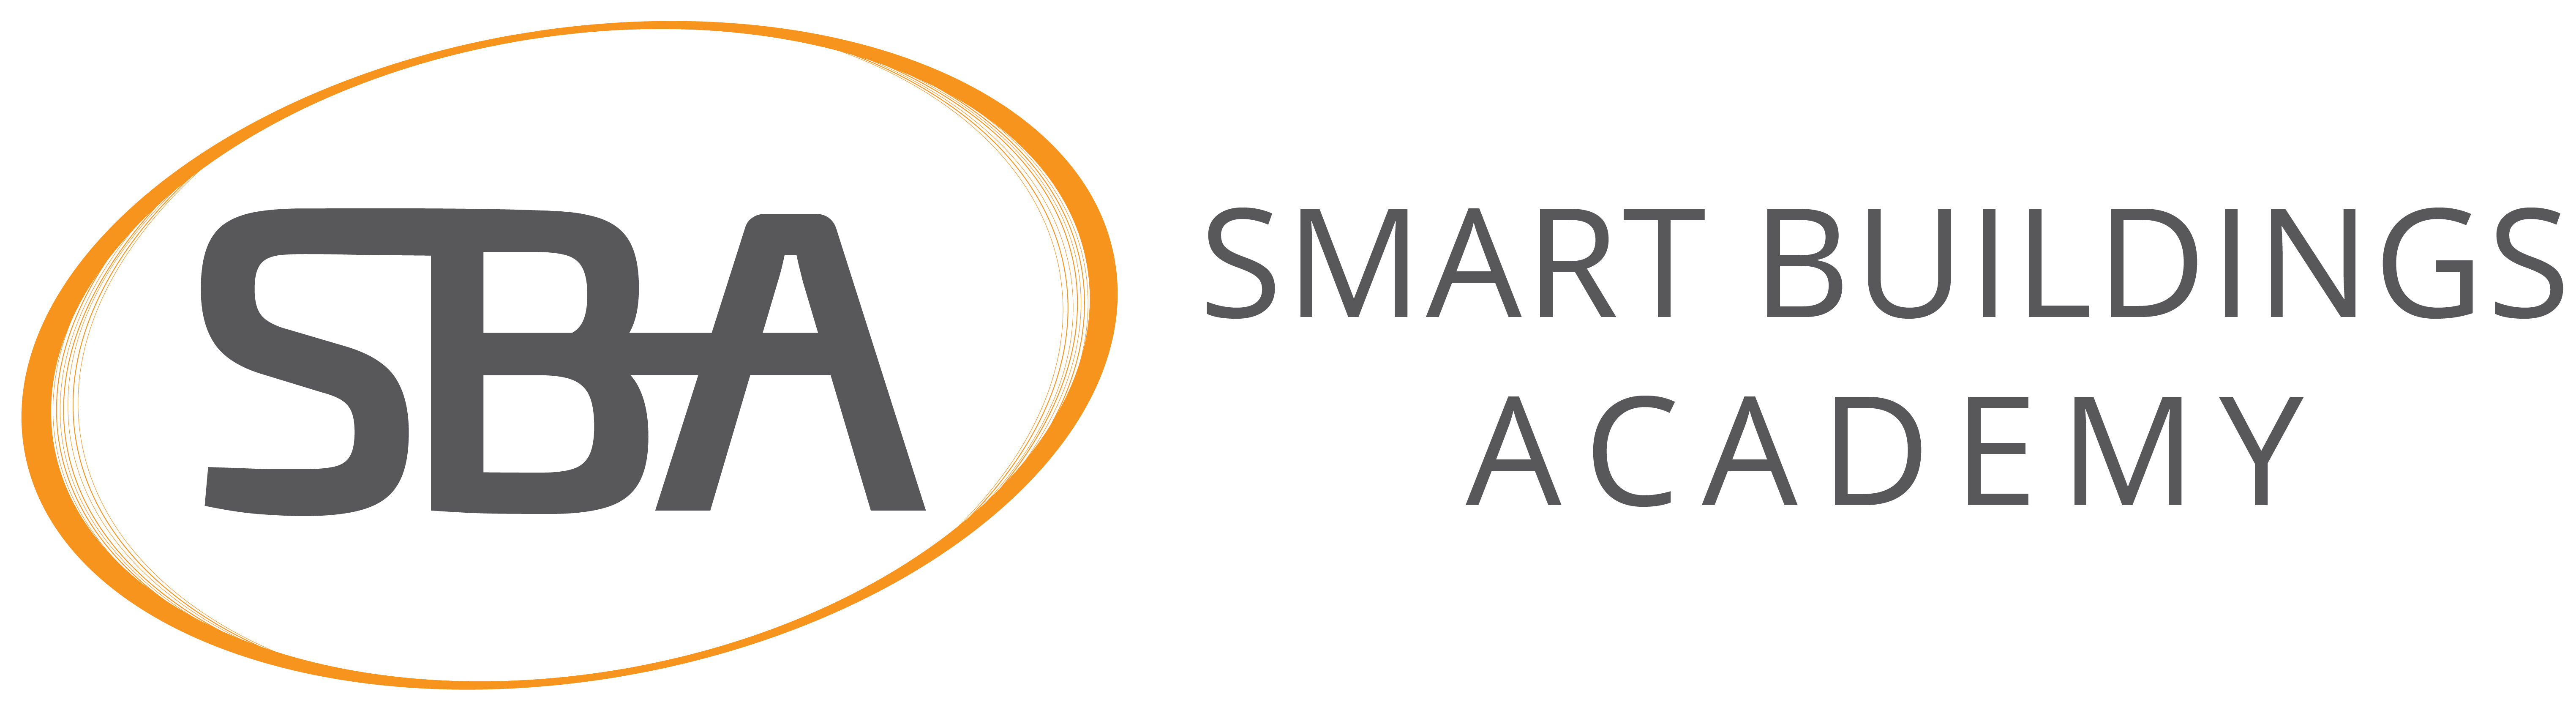 Smart Buildings Academy